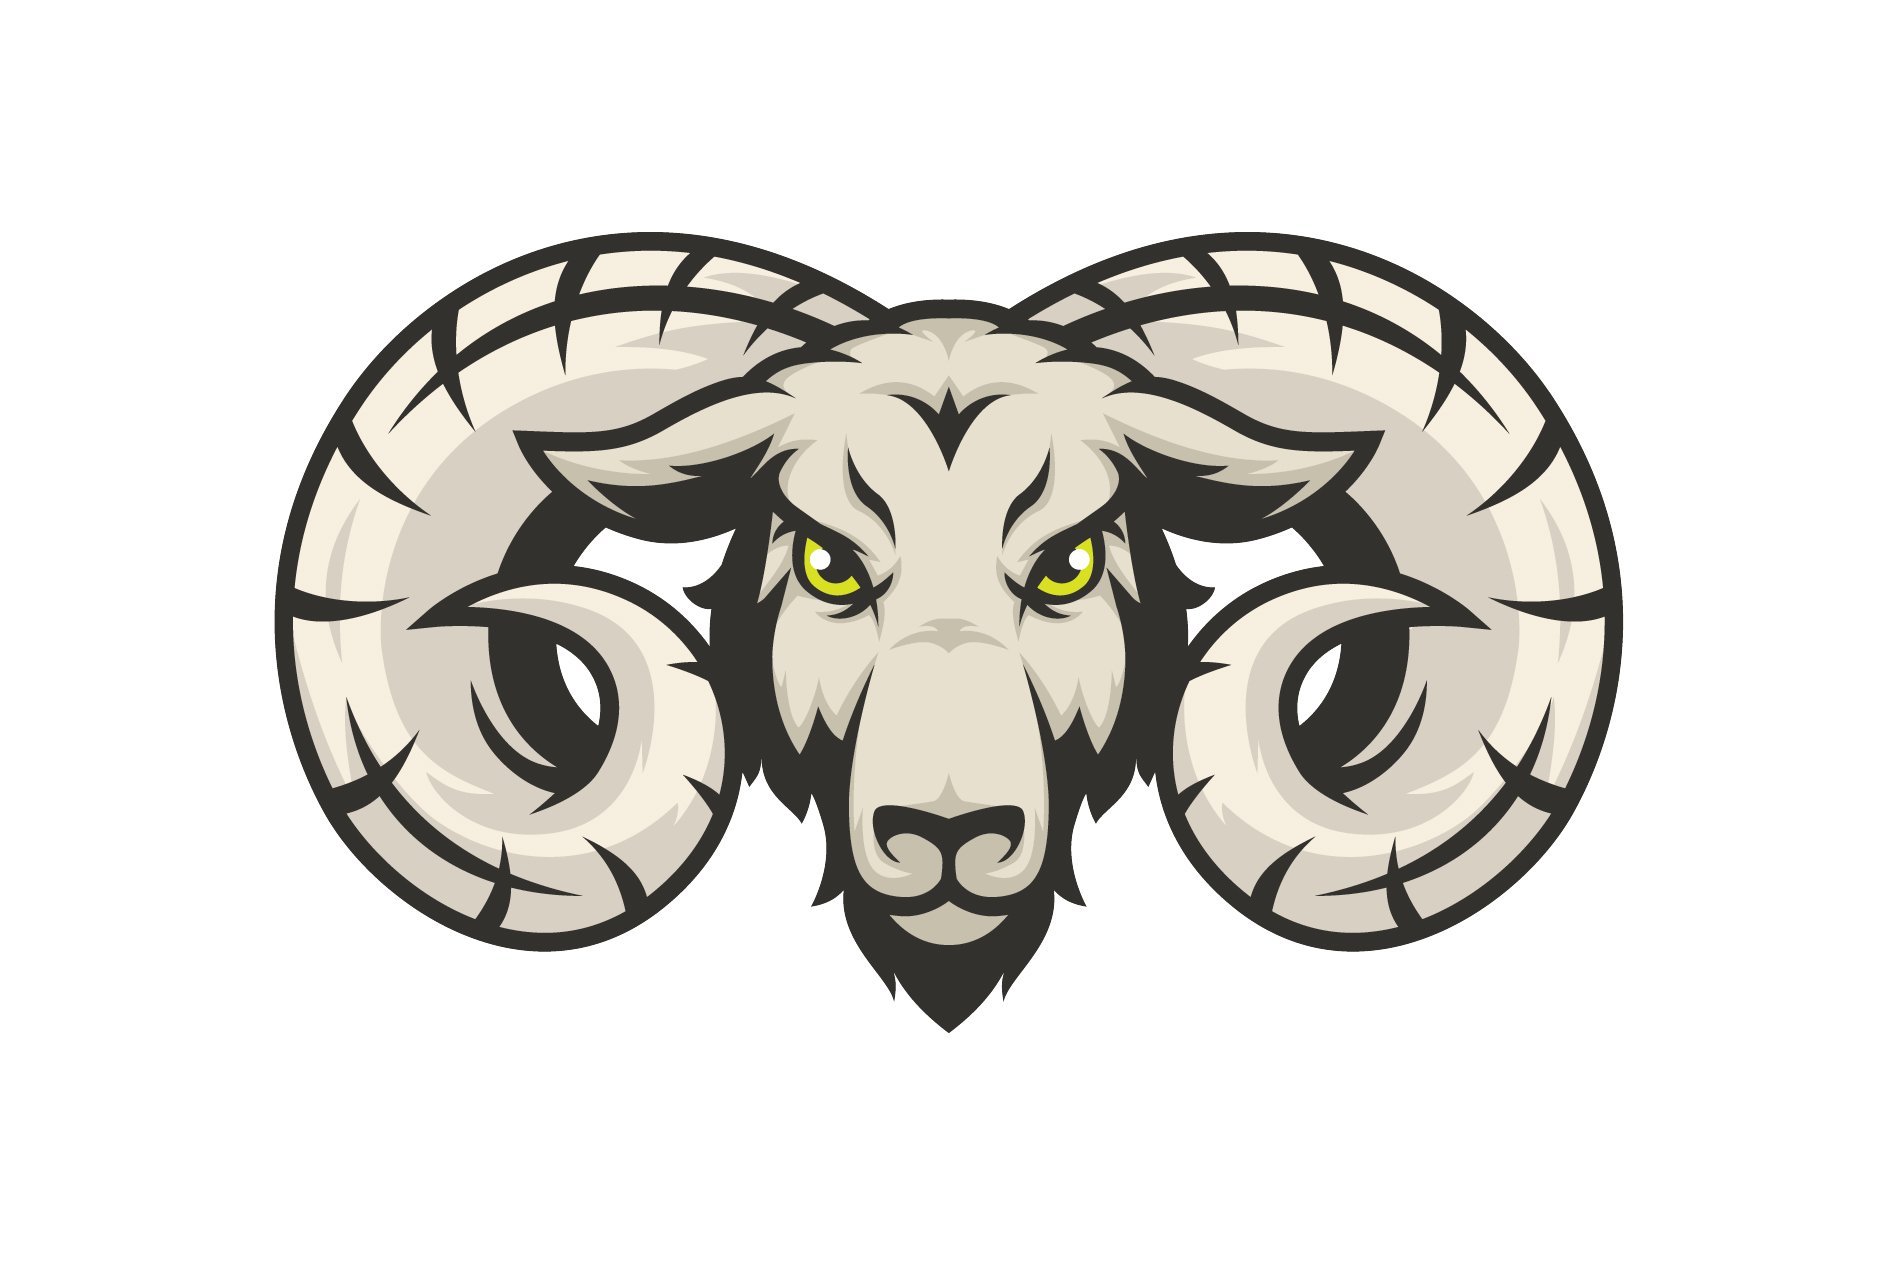 Goat Head Squad-Mascot & Esport Logo preview image.